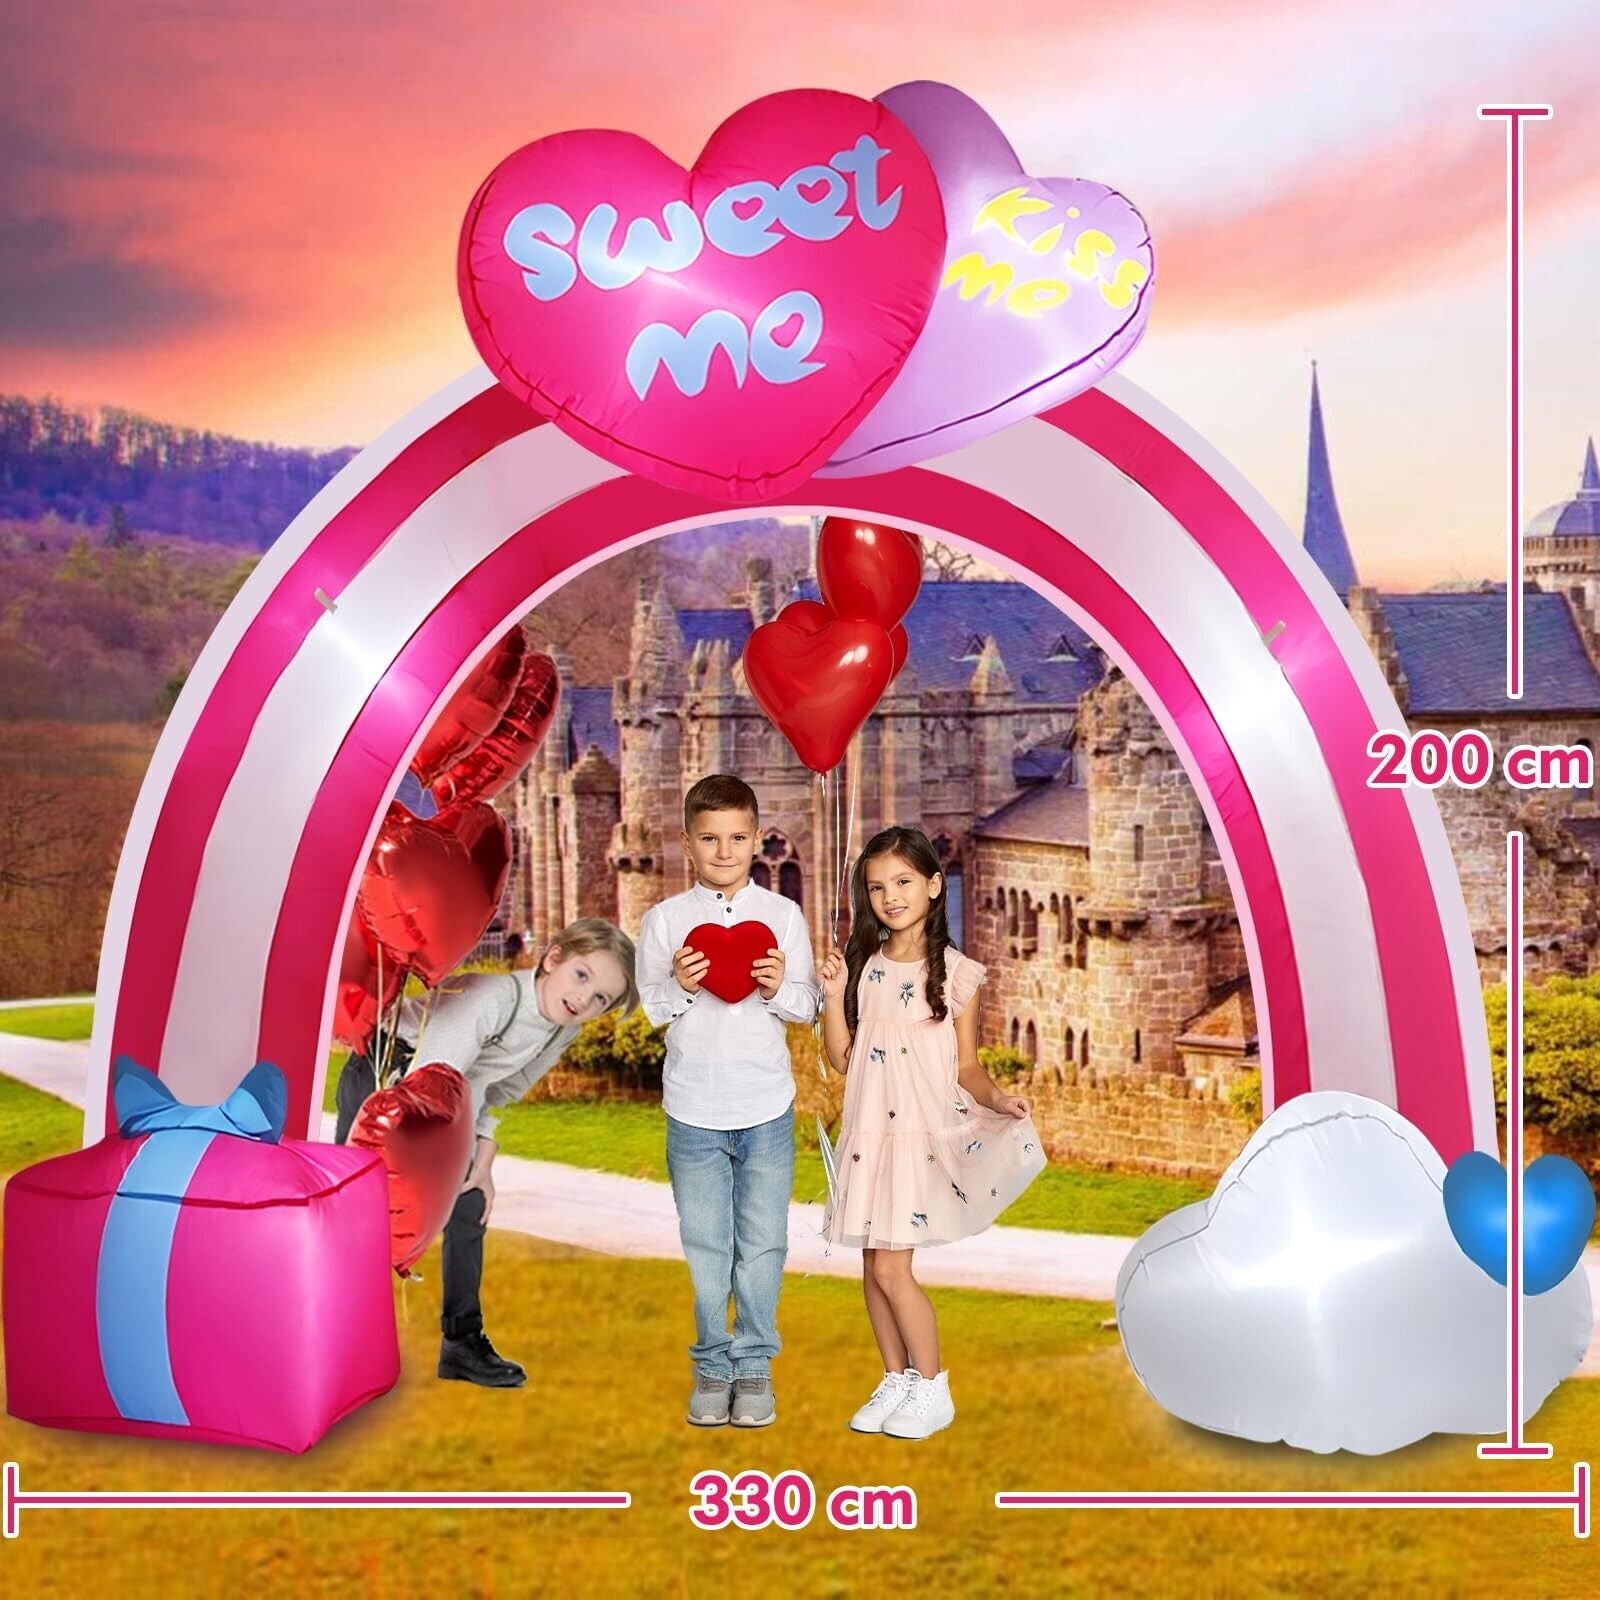 Danxilu 10 FT Valentine Inflatables Outdoor Decorations, Valentines Day Infla...